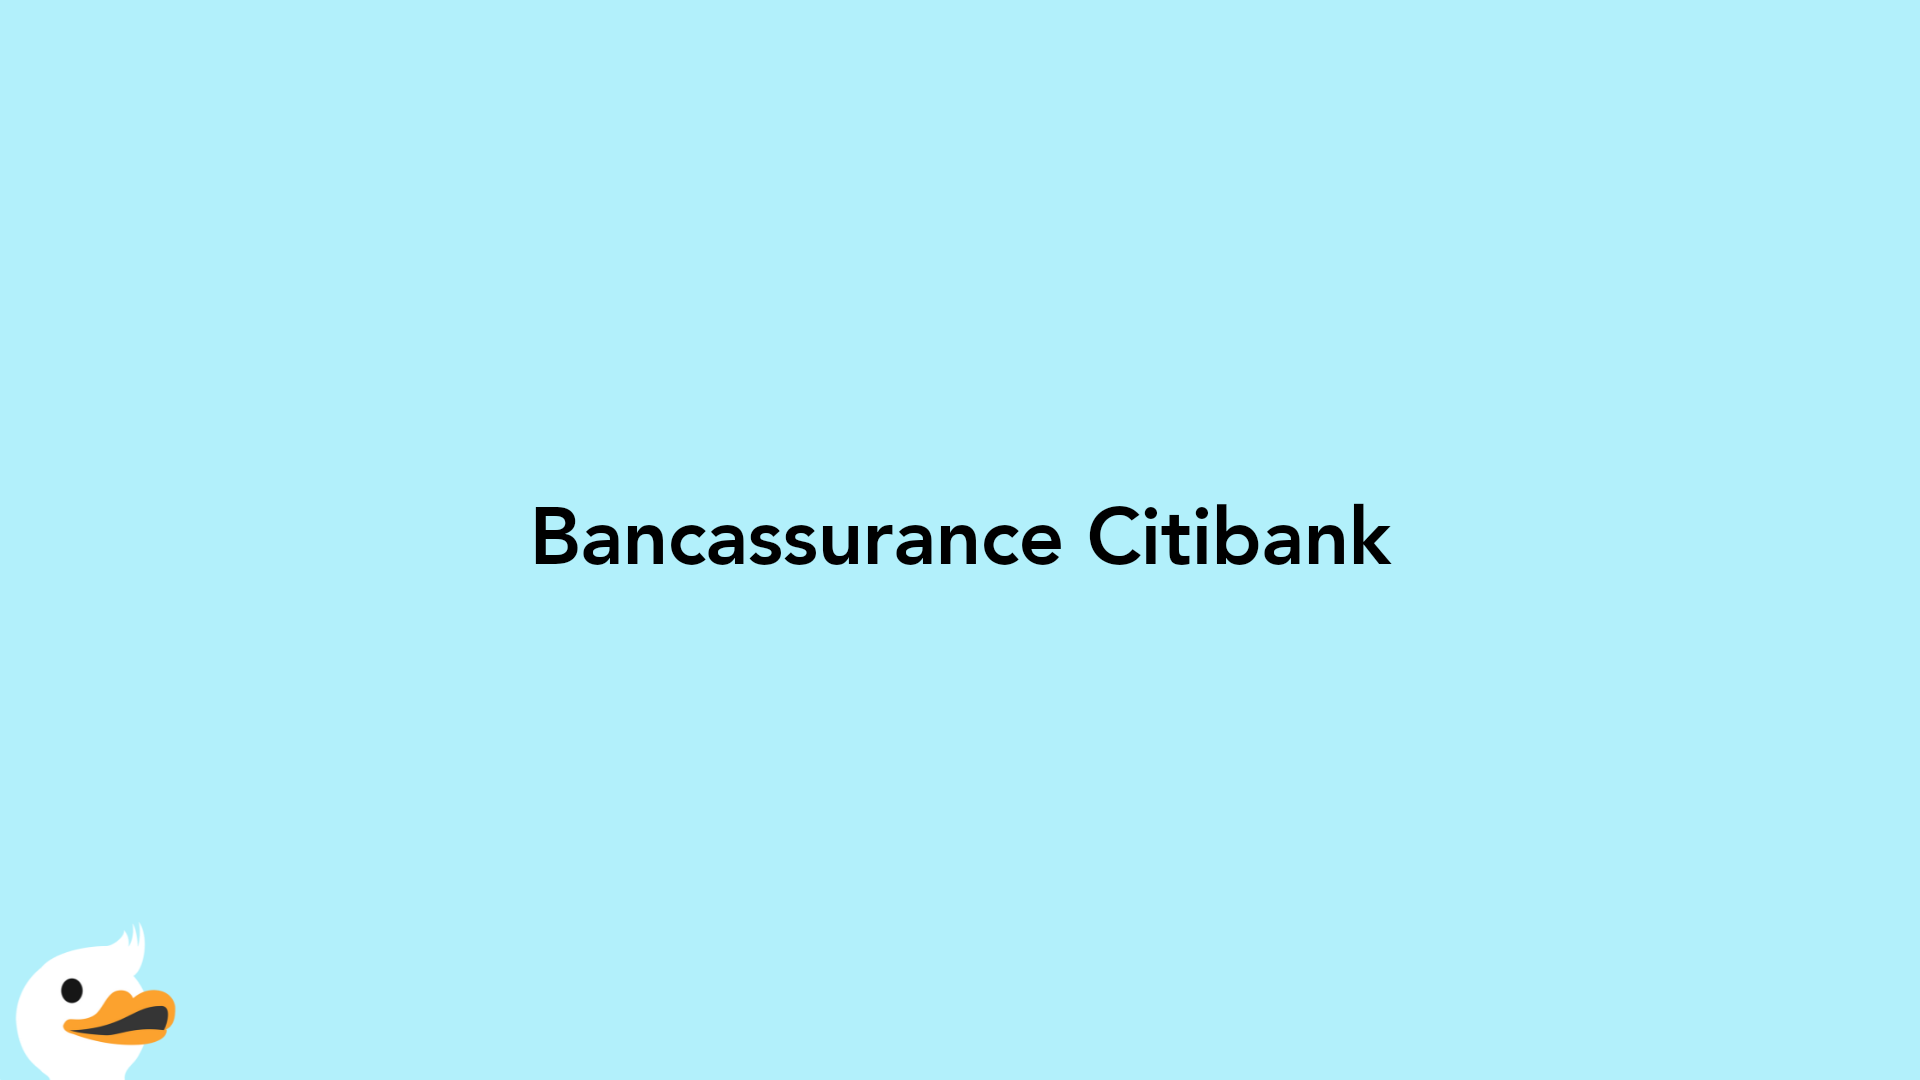 Bancassurance Citibank